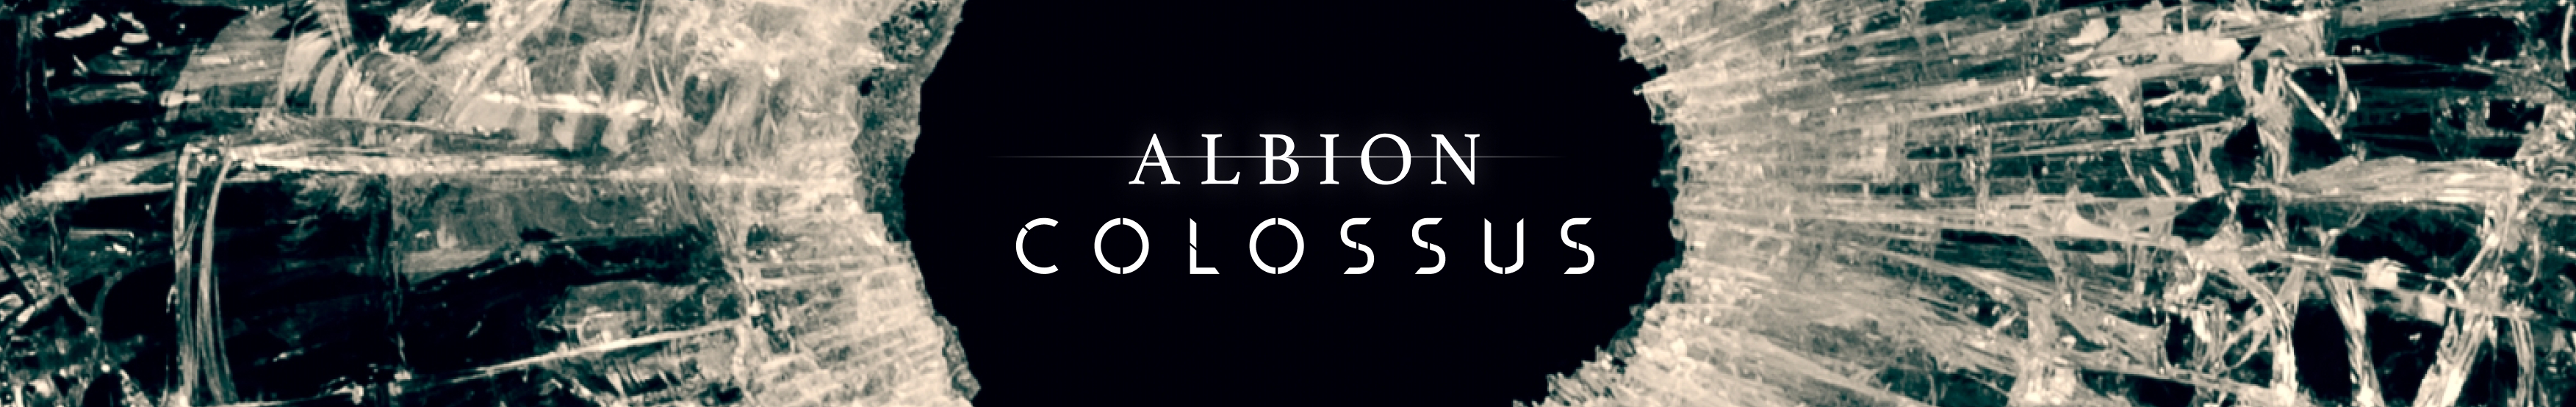 AlbionColossus_banner.jpg